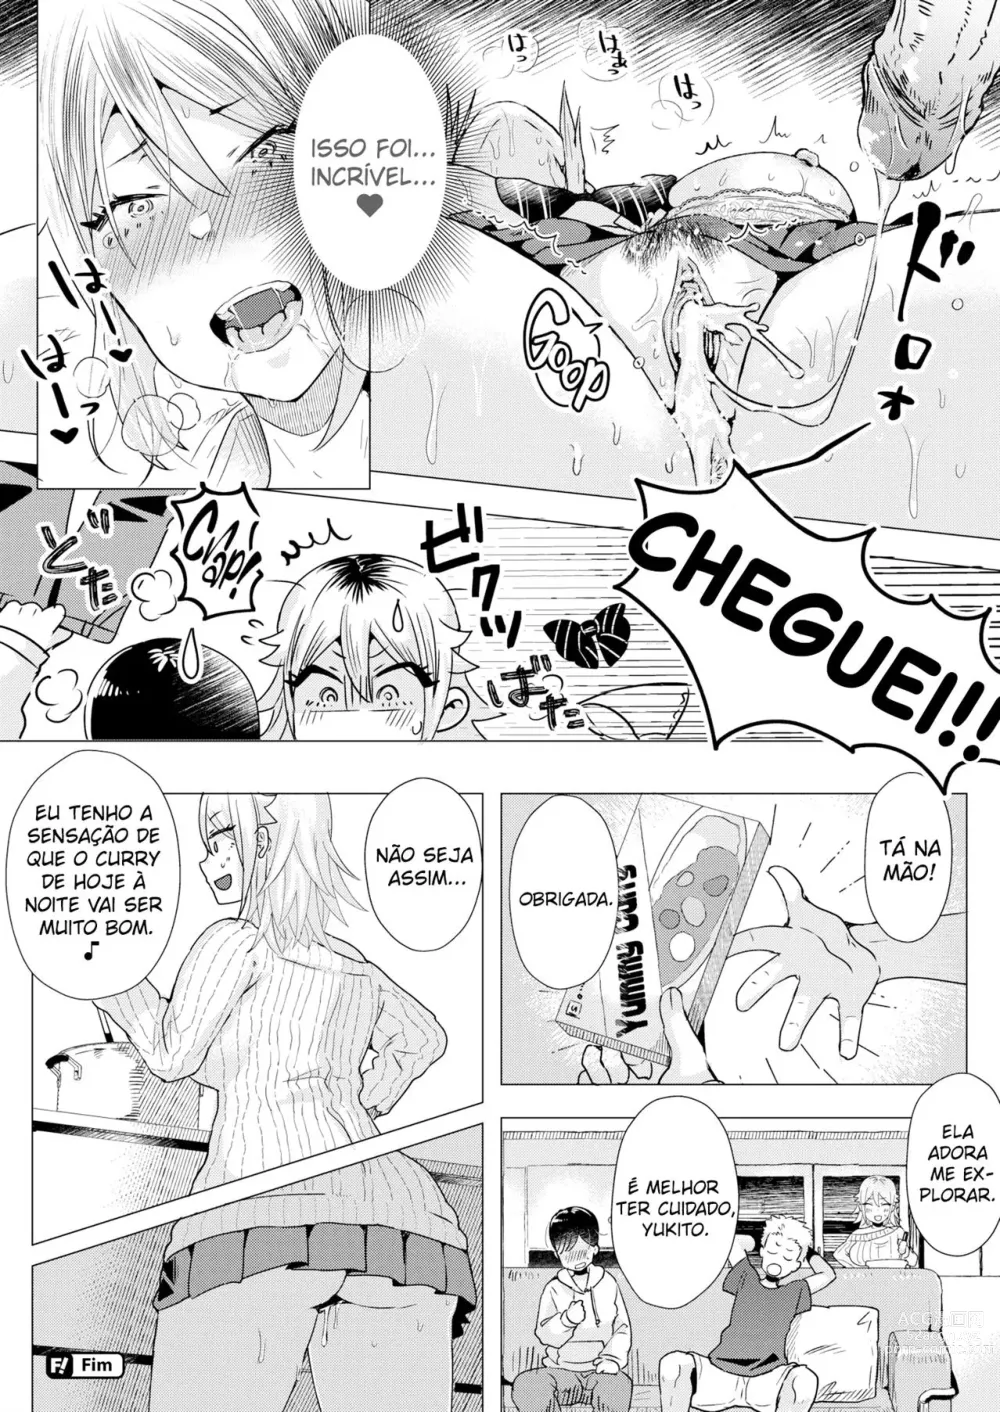 Page 22 of doujinshi Ataque repentino da mãe gyaru